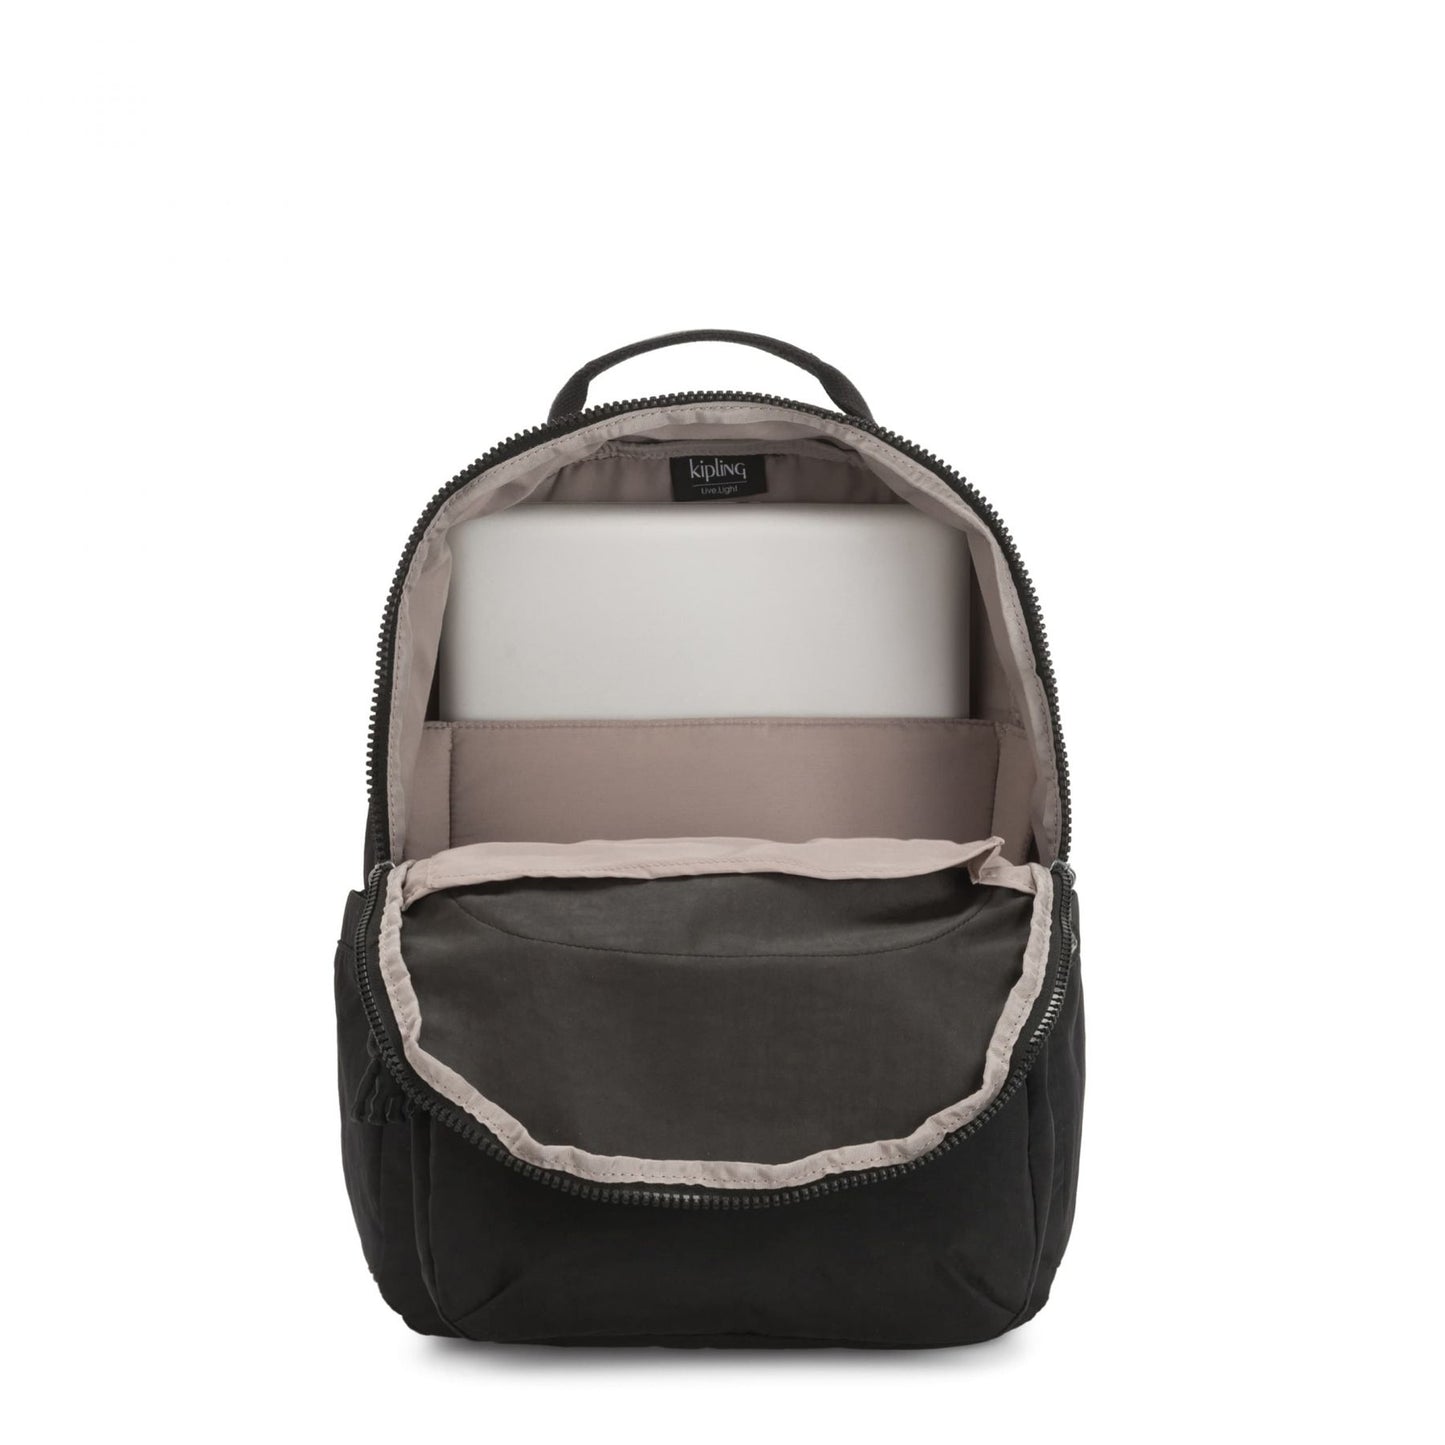 SEOUL Large backpack with Laptop Protection Black Noir - BambiniJO | Buy Online | Jordan